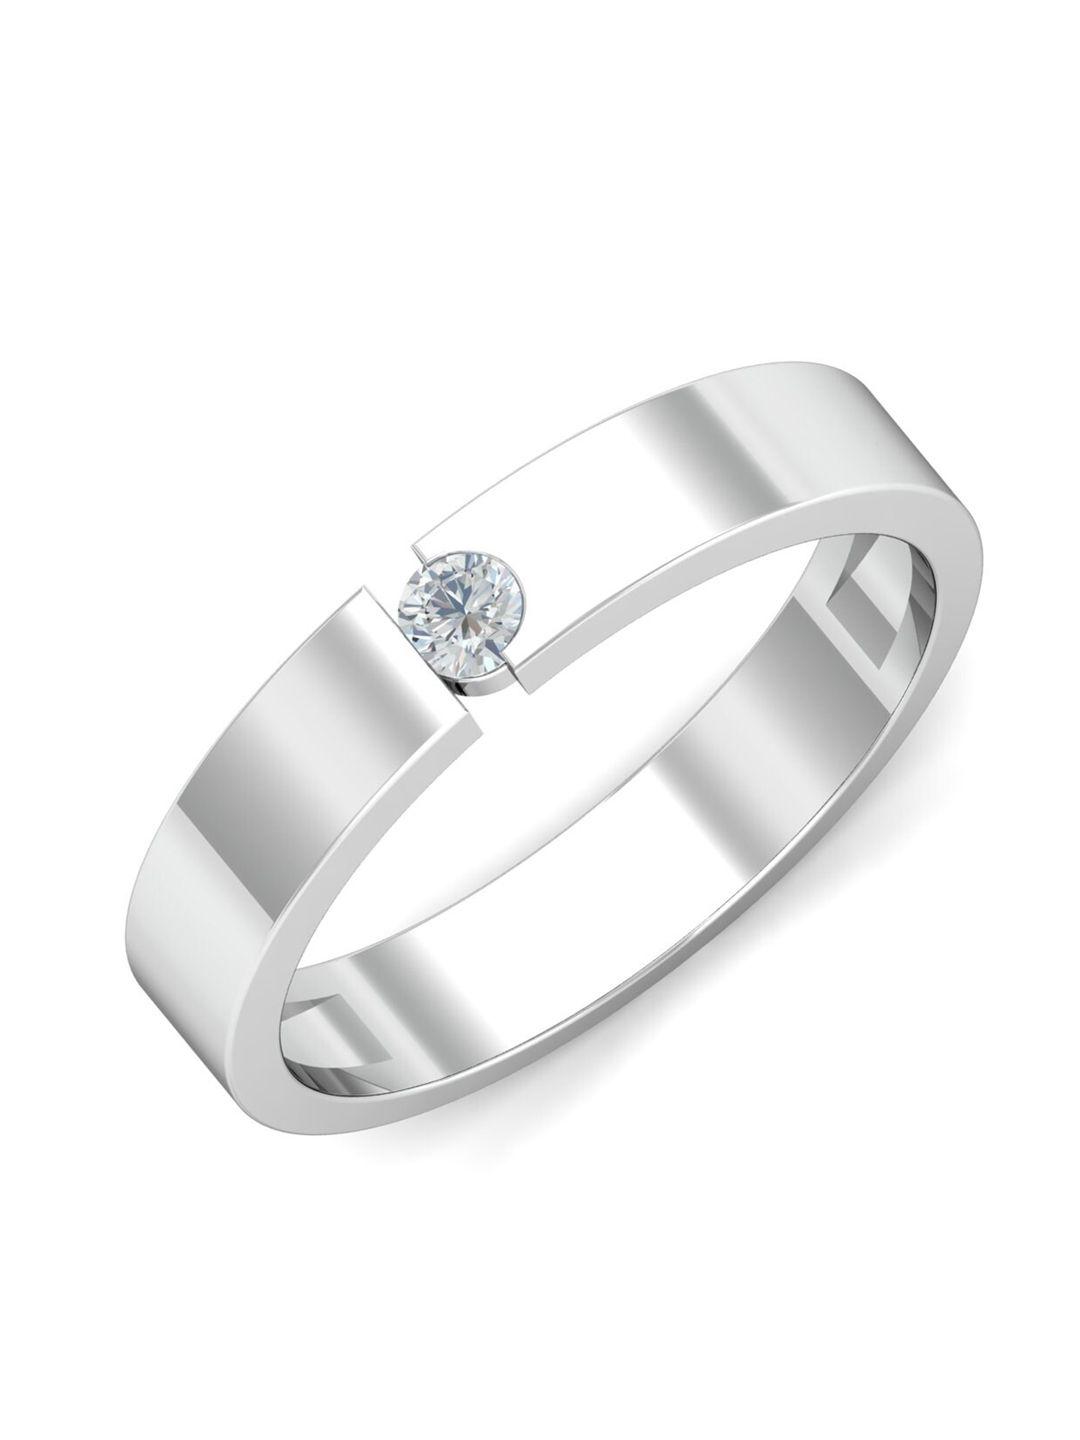 kuberbox zera solitaire men18kt white gold diamond-studded band ring-4.58 gm